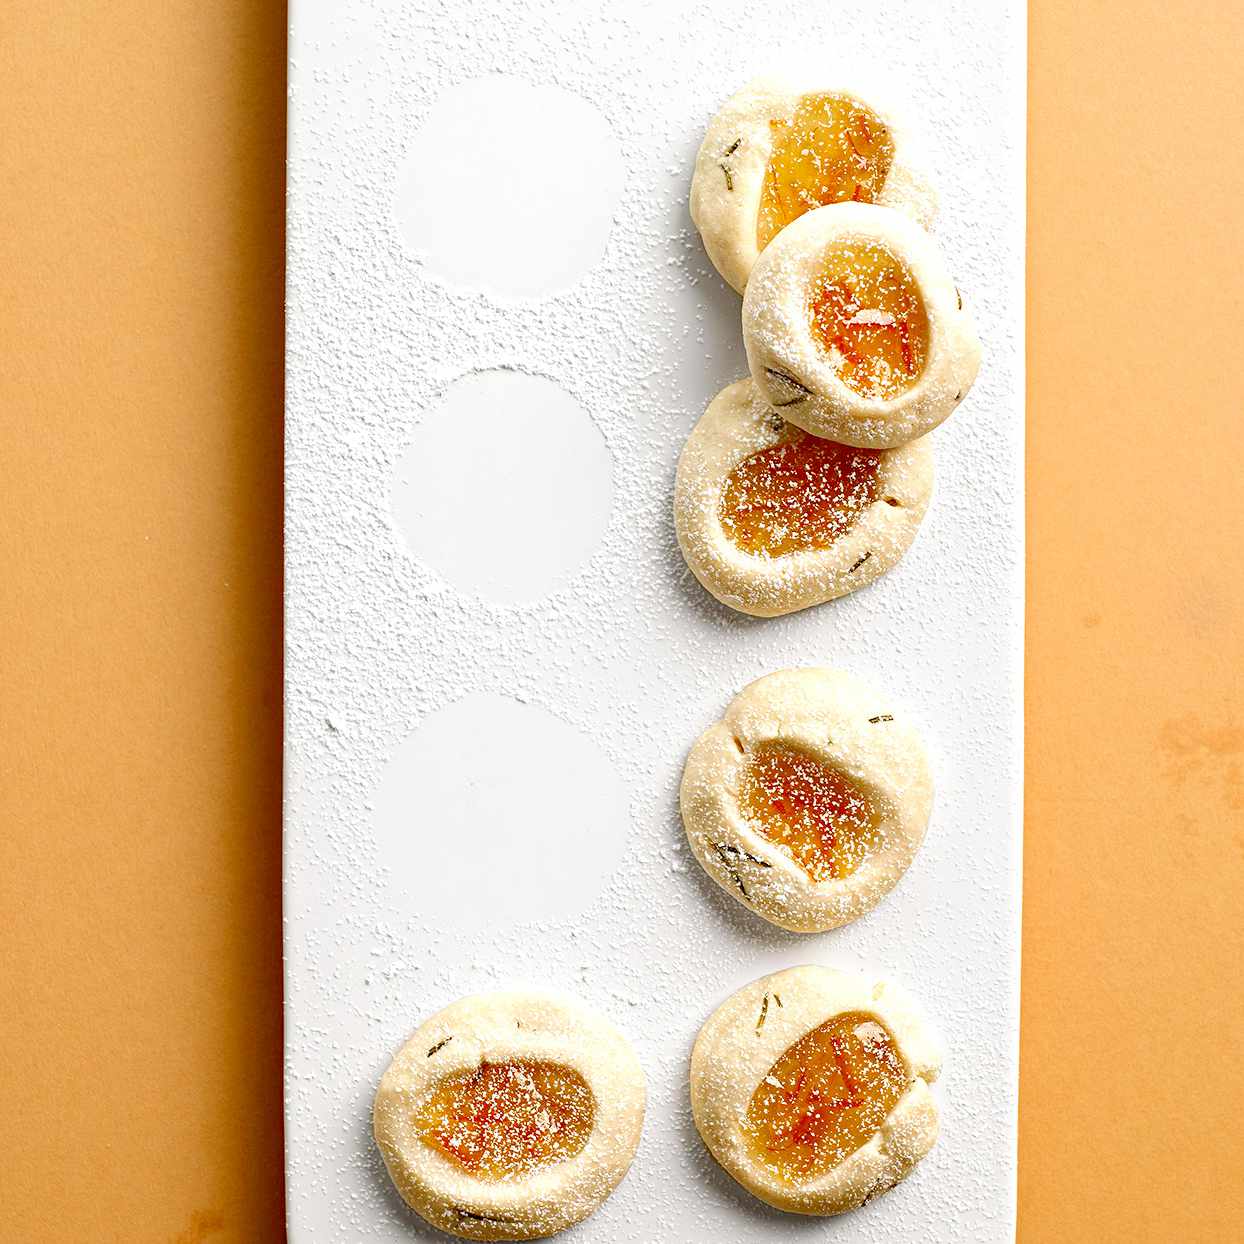 Rosemary-Kissed Orange Thumbprint Cookies Tuscano